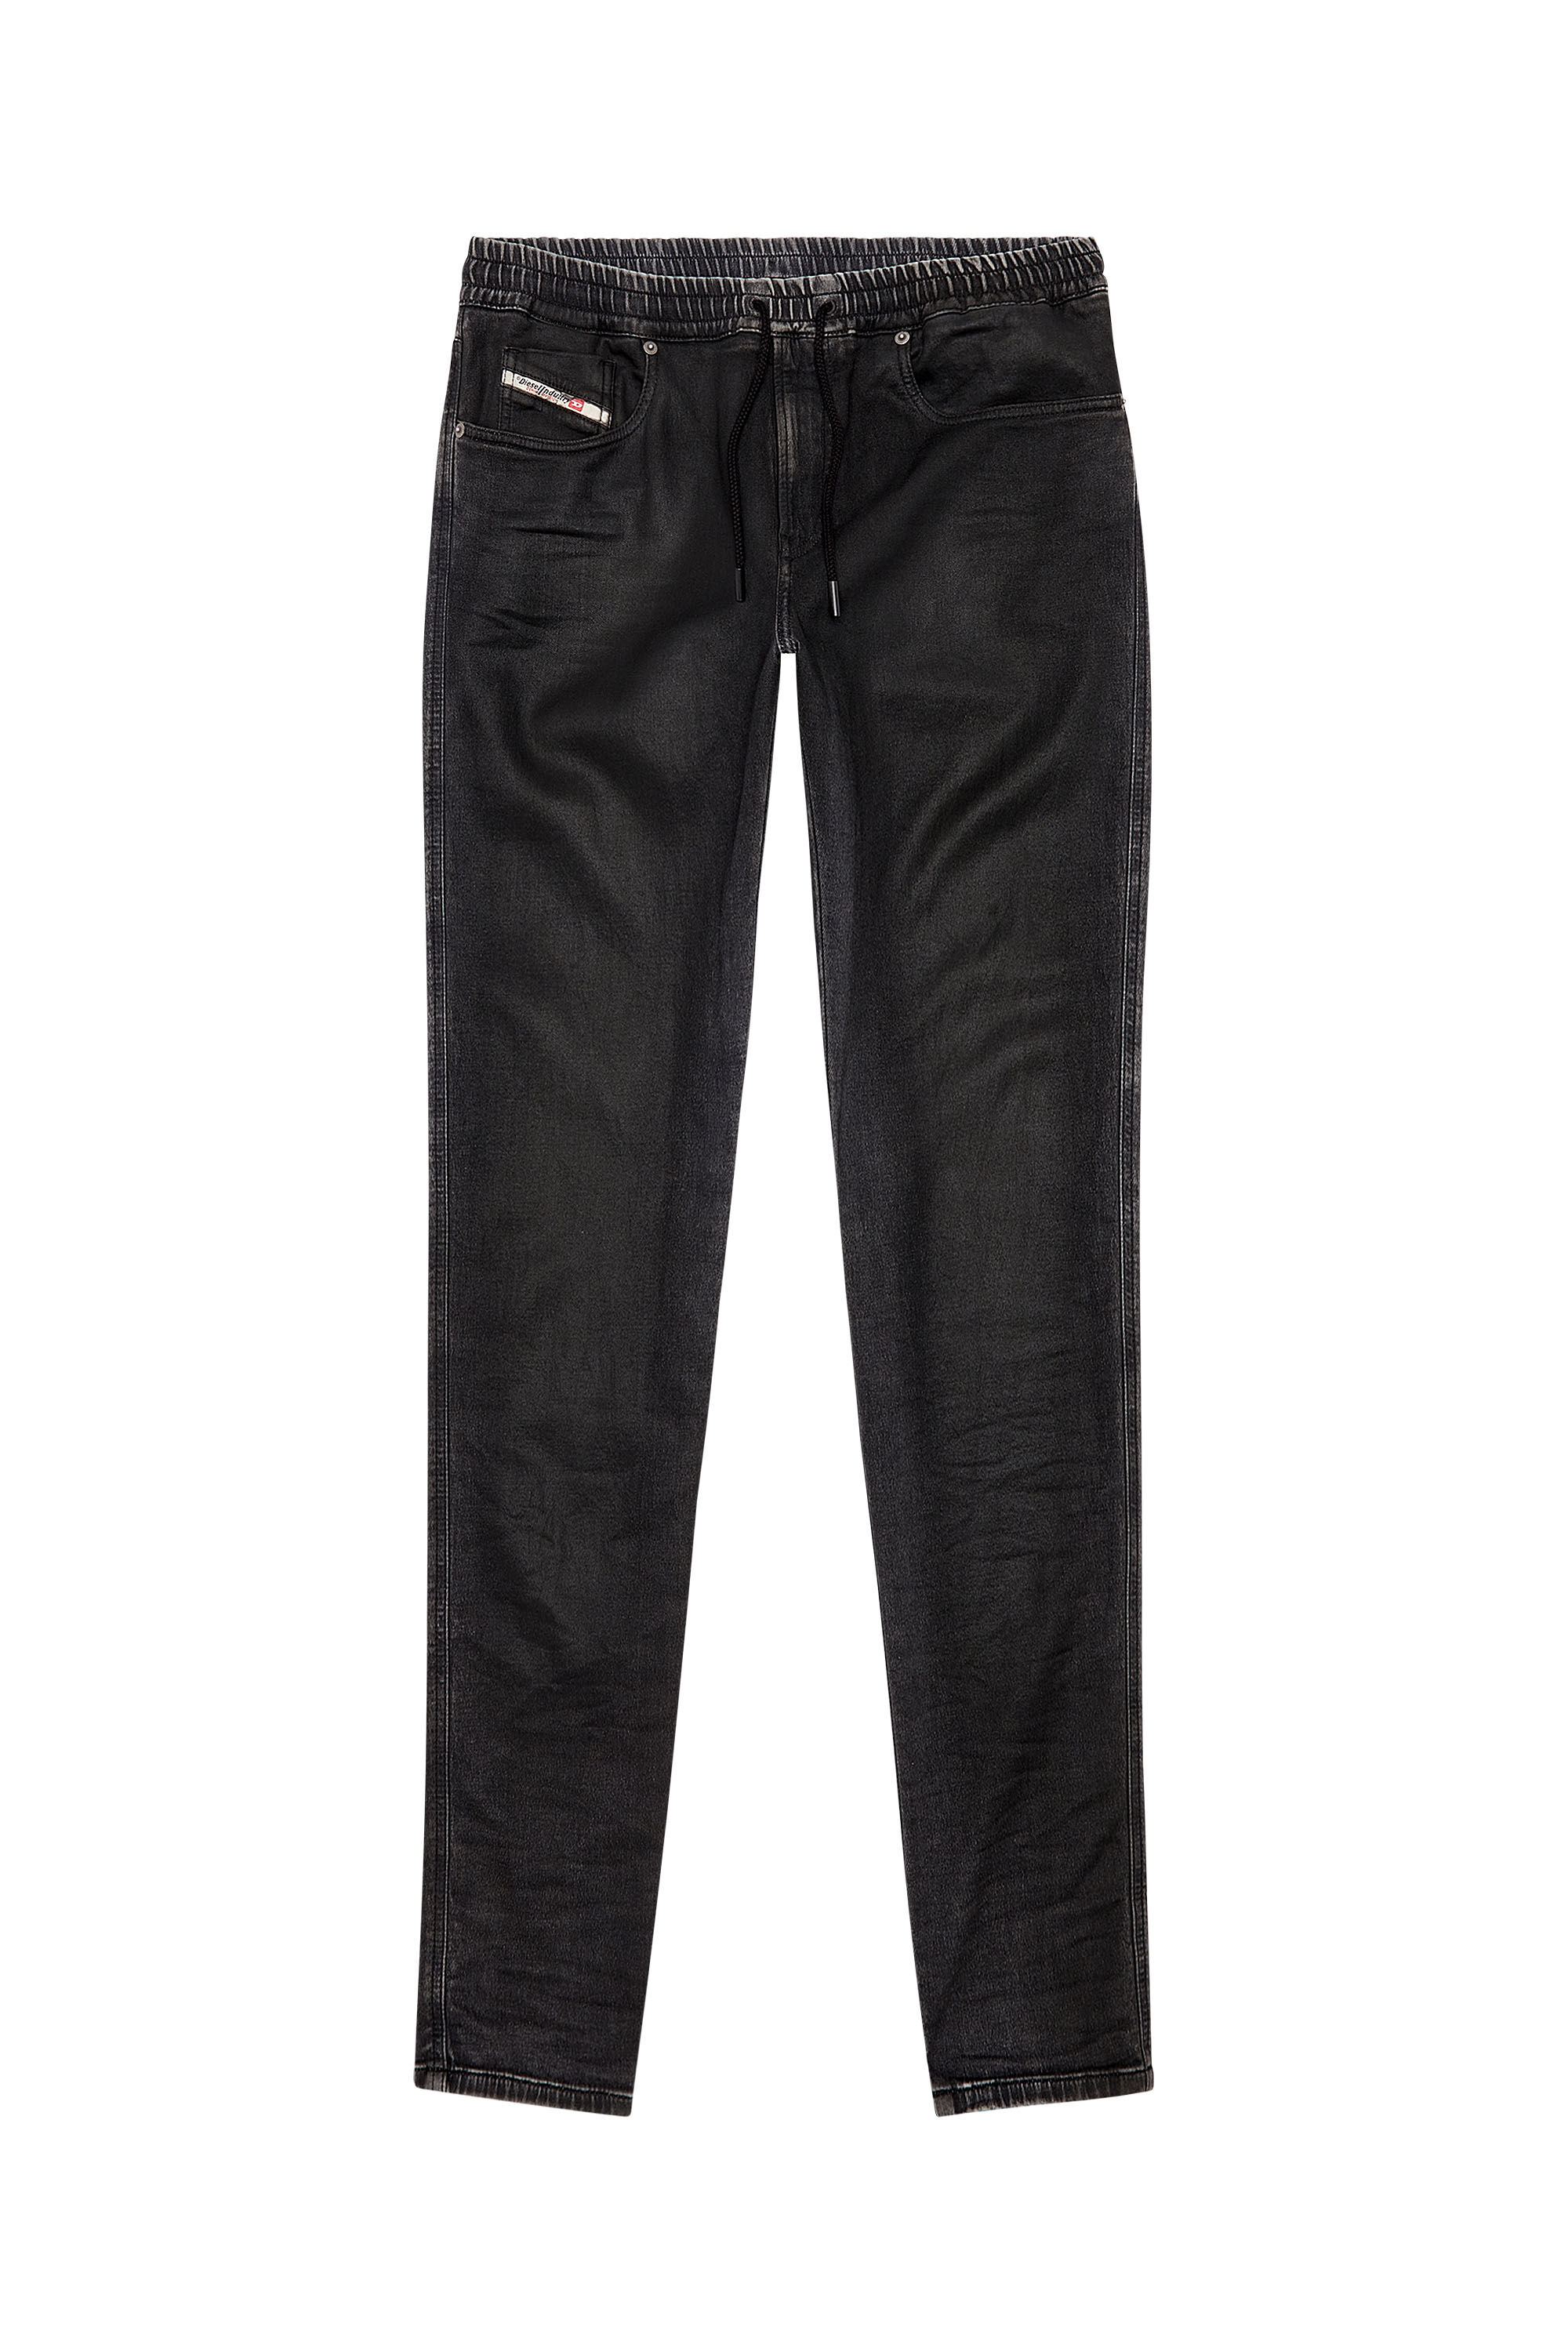 Herren Slim Jeans | Schwarz/Dunkelgrau | Diesel 2060 D-Strukt 